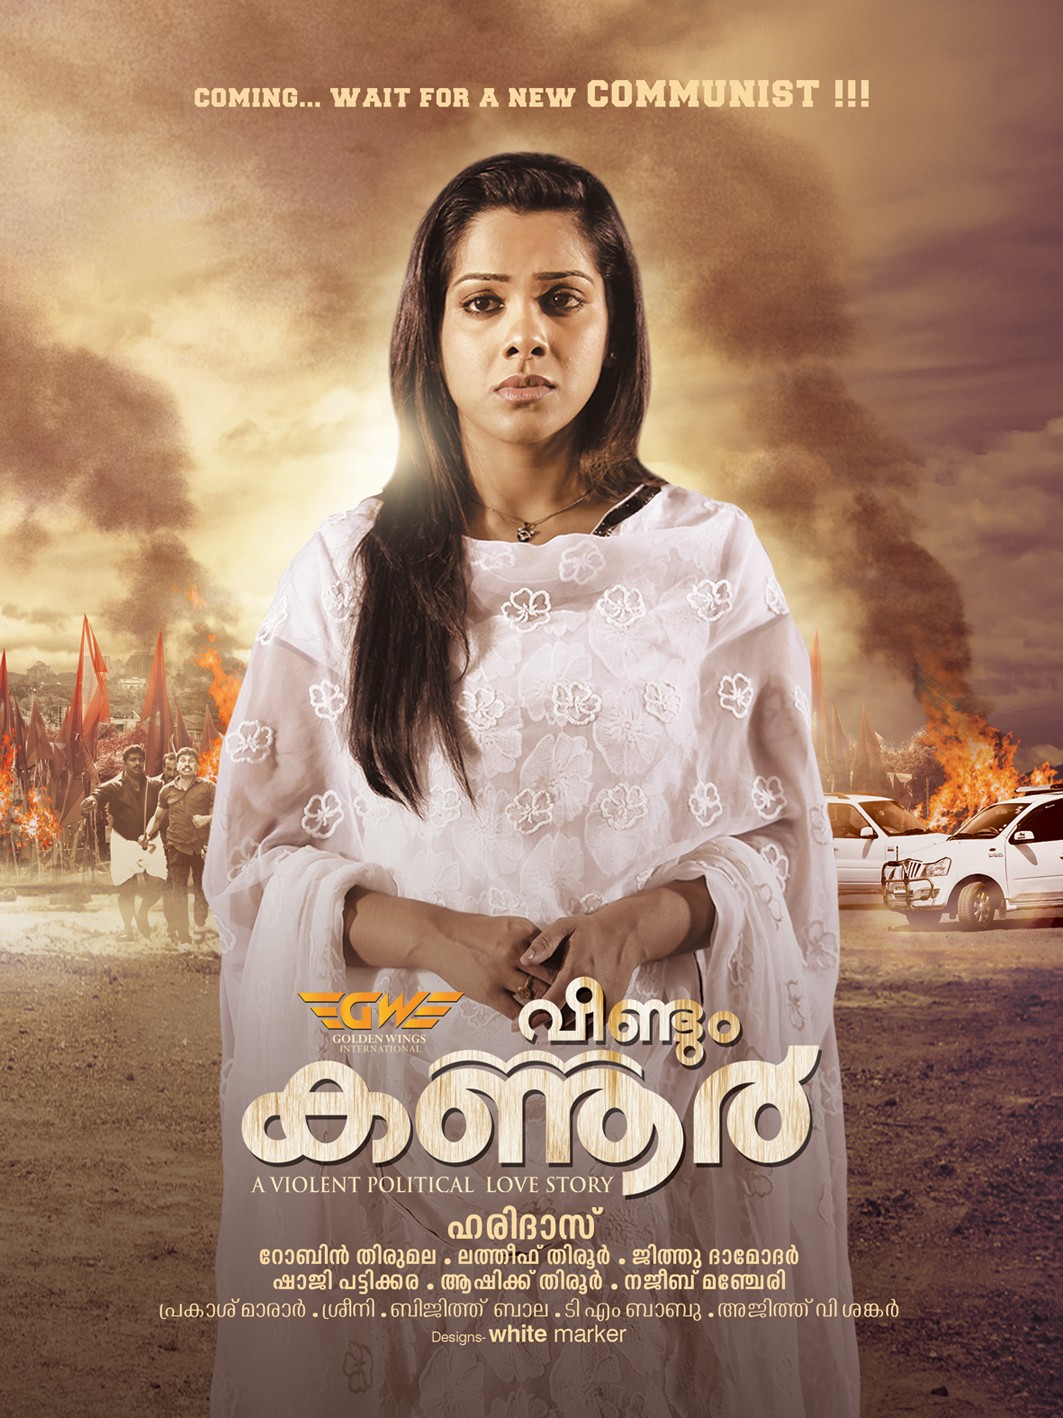 Extra Large Movie Poster Image for Veendum Kannur (#6 of 14)